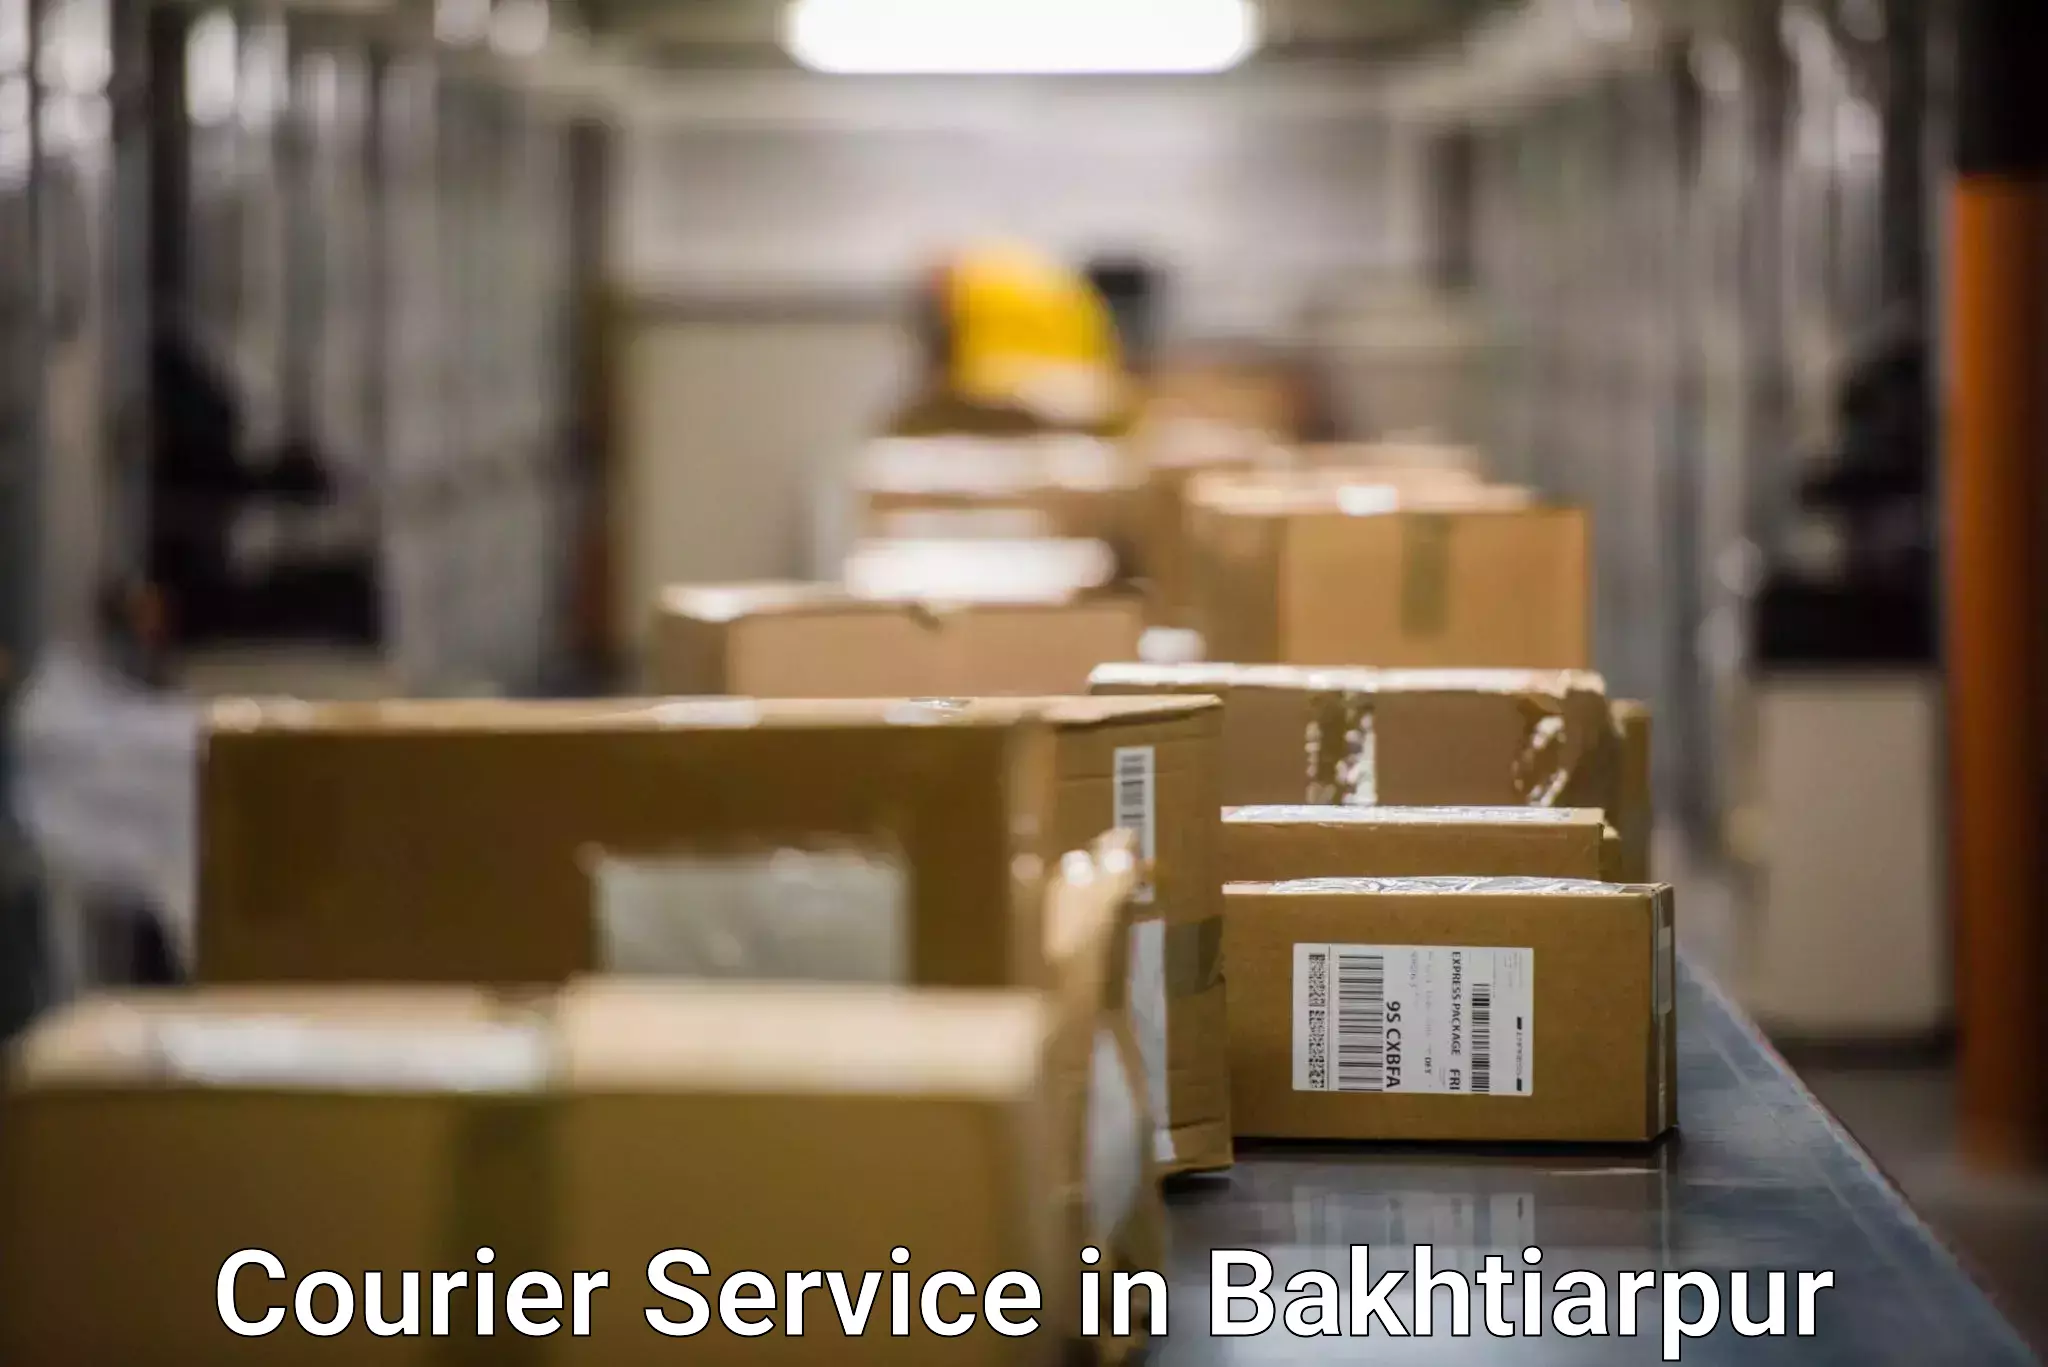 Same day shipping in Bakhtiarpur